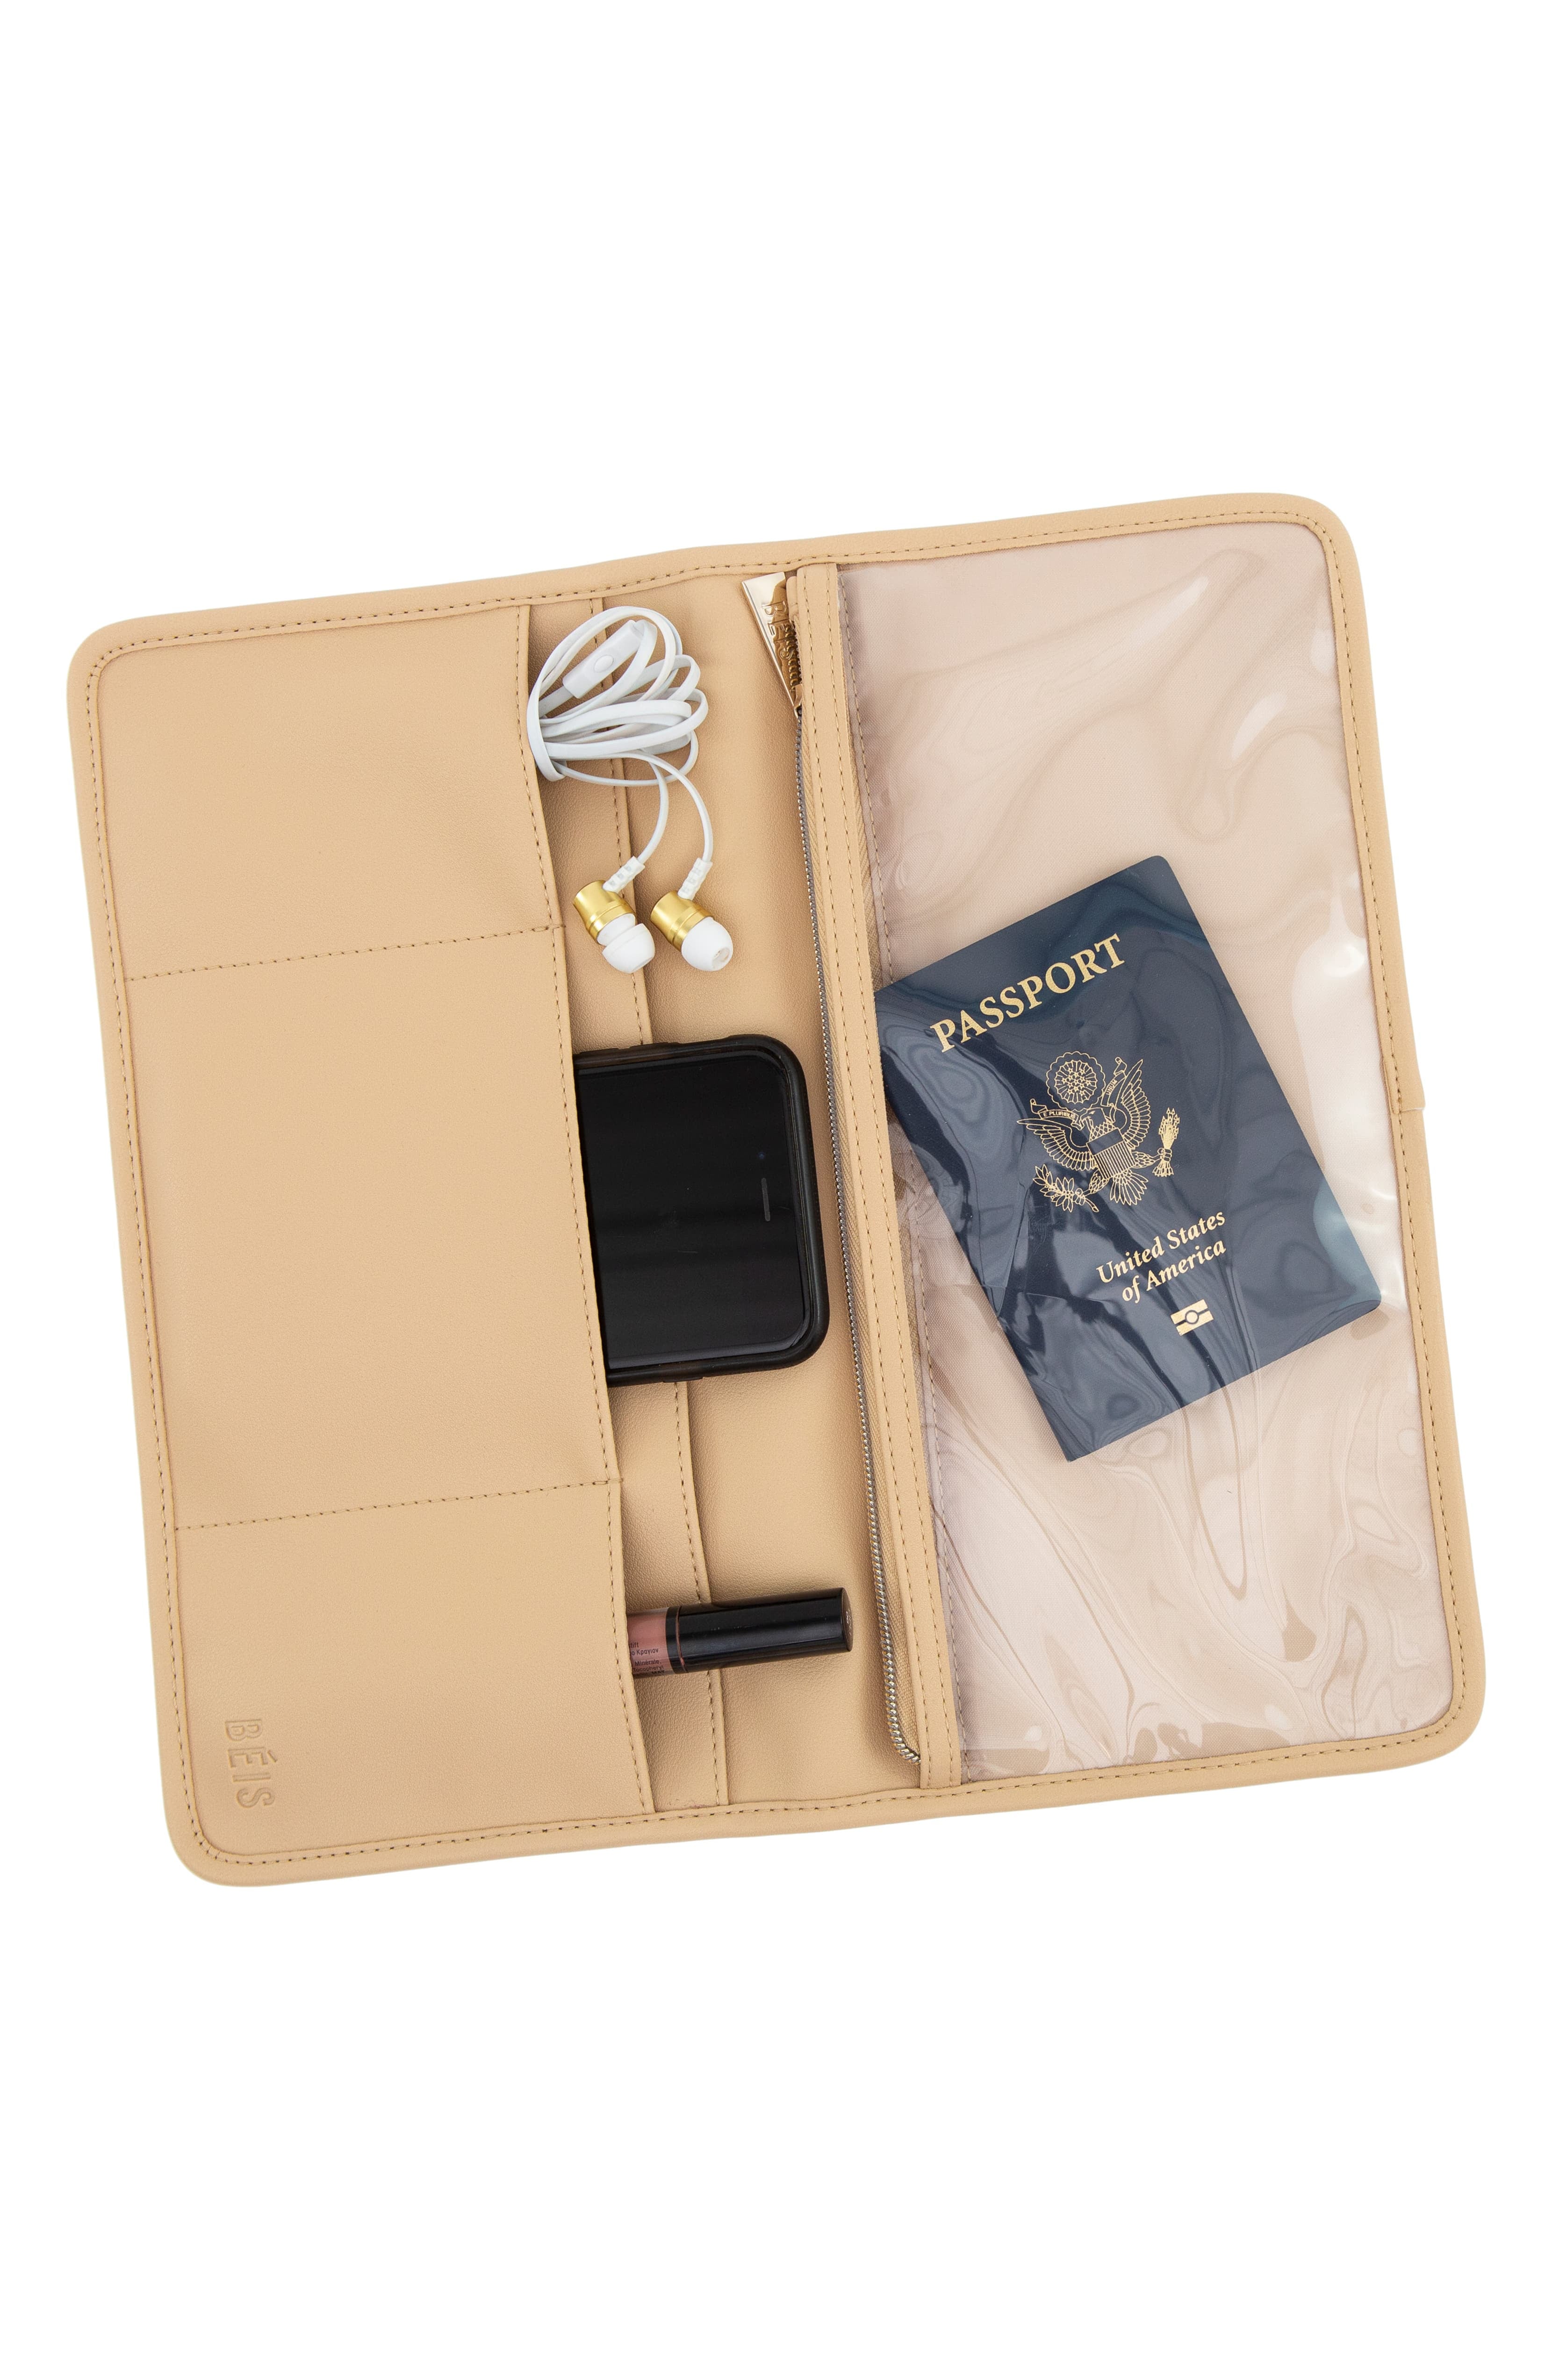 New Beautiful Designer MIAMICA Passport Case - Protector Travel Organizer